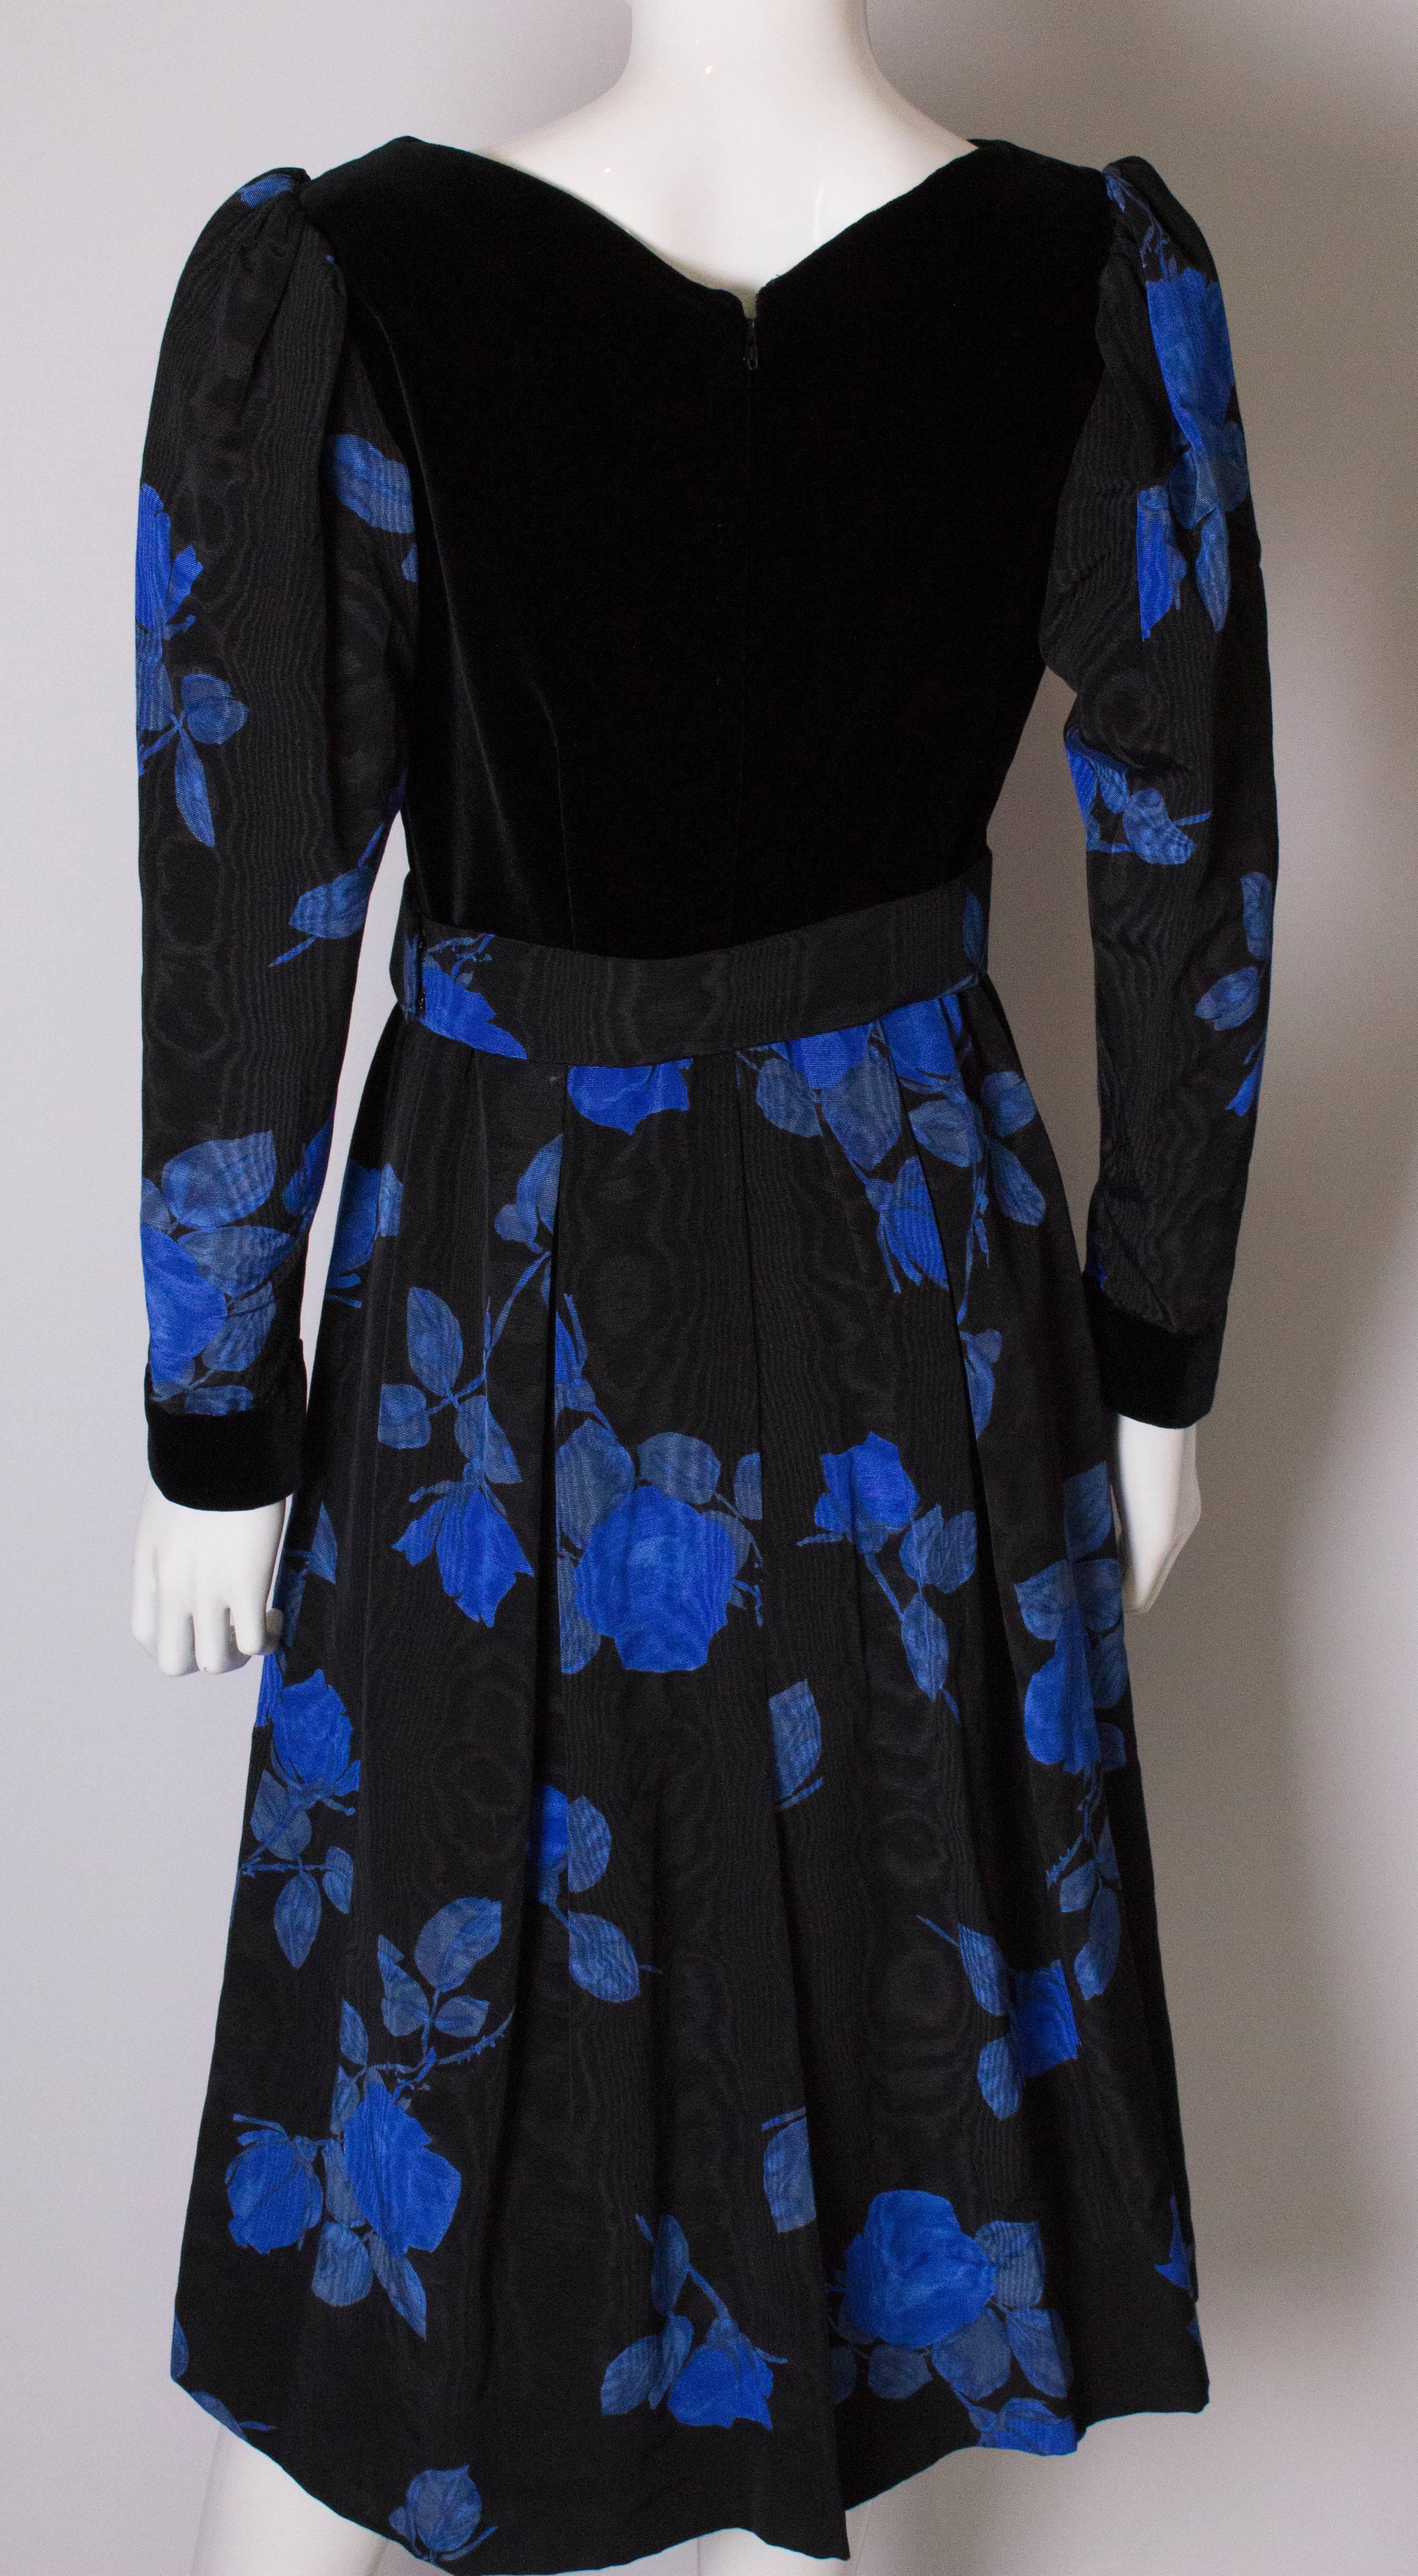 Vintage Donald Campbell Blue and Black Cocktail Dress For Sale 2